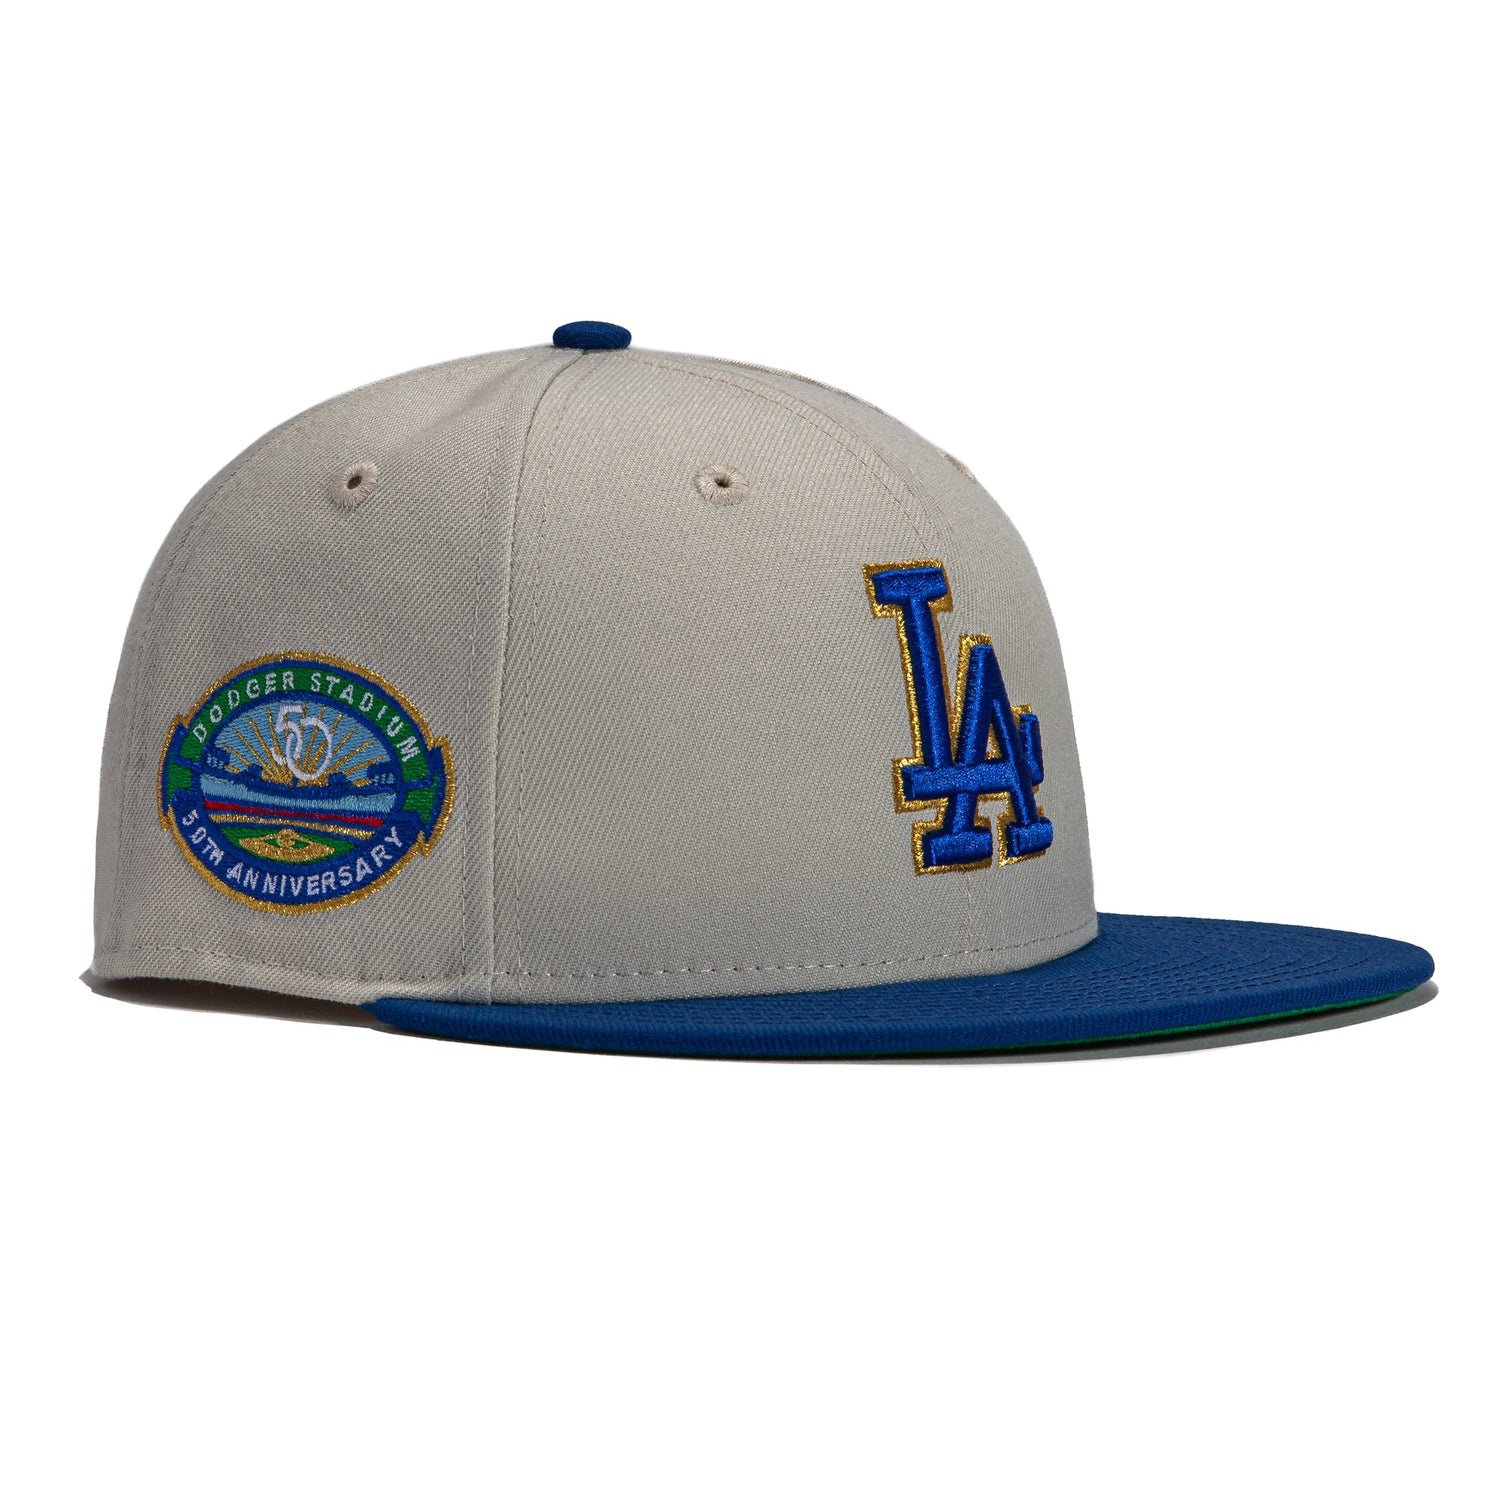 Los Angeles Dodgers New Era Dodger Stadium 40th Anniversary